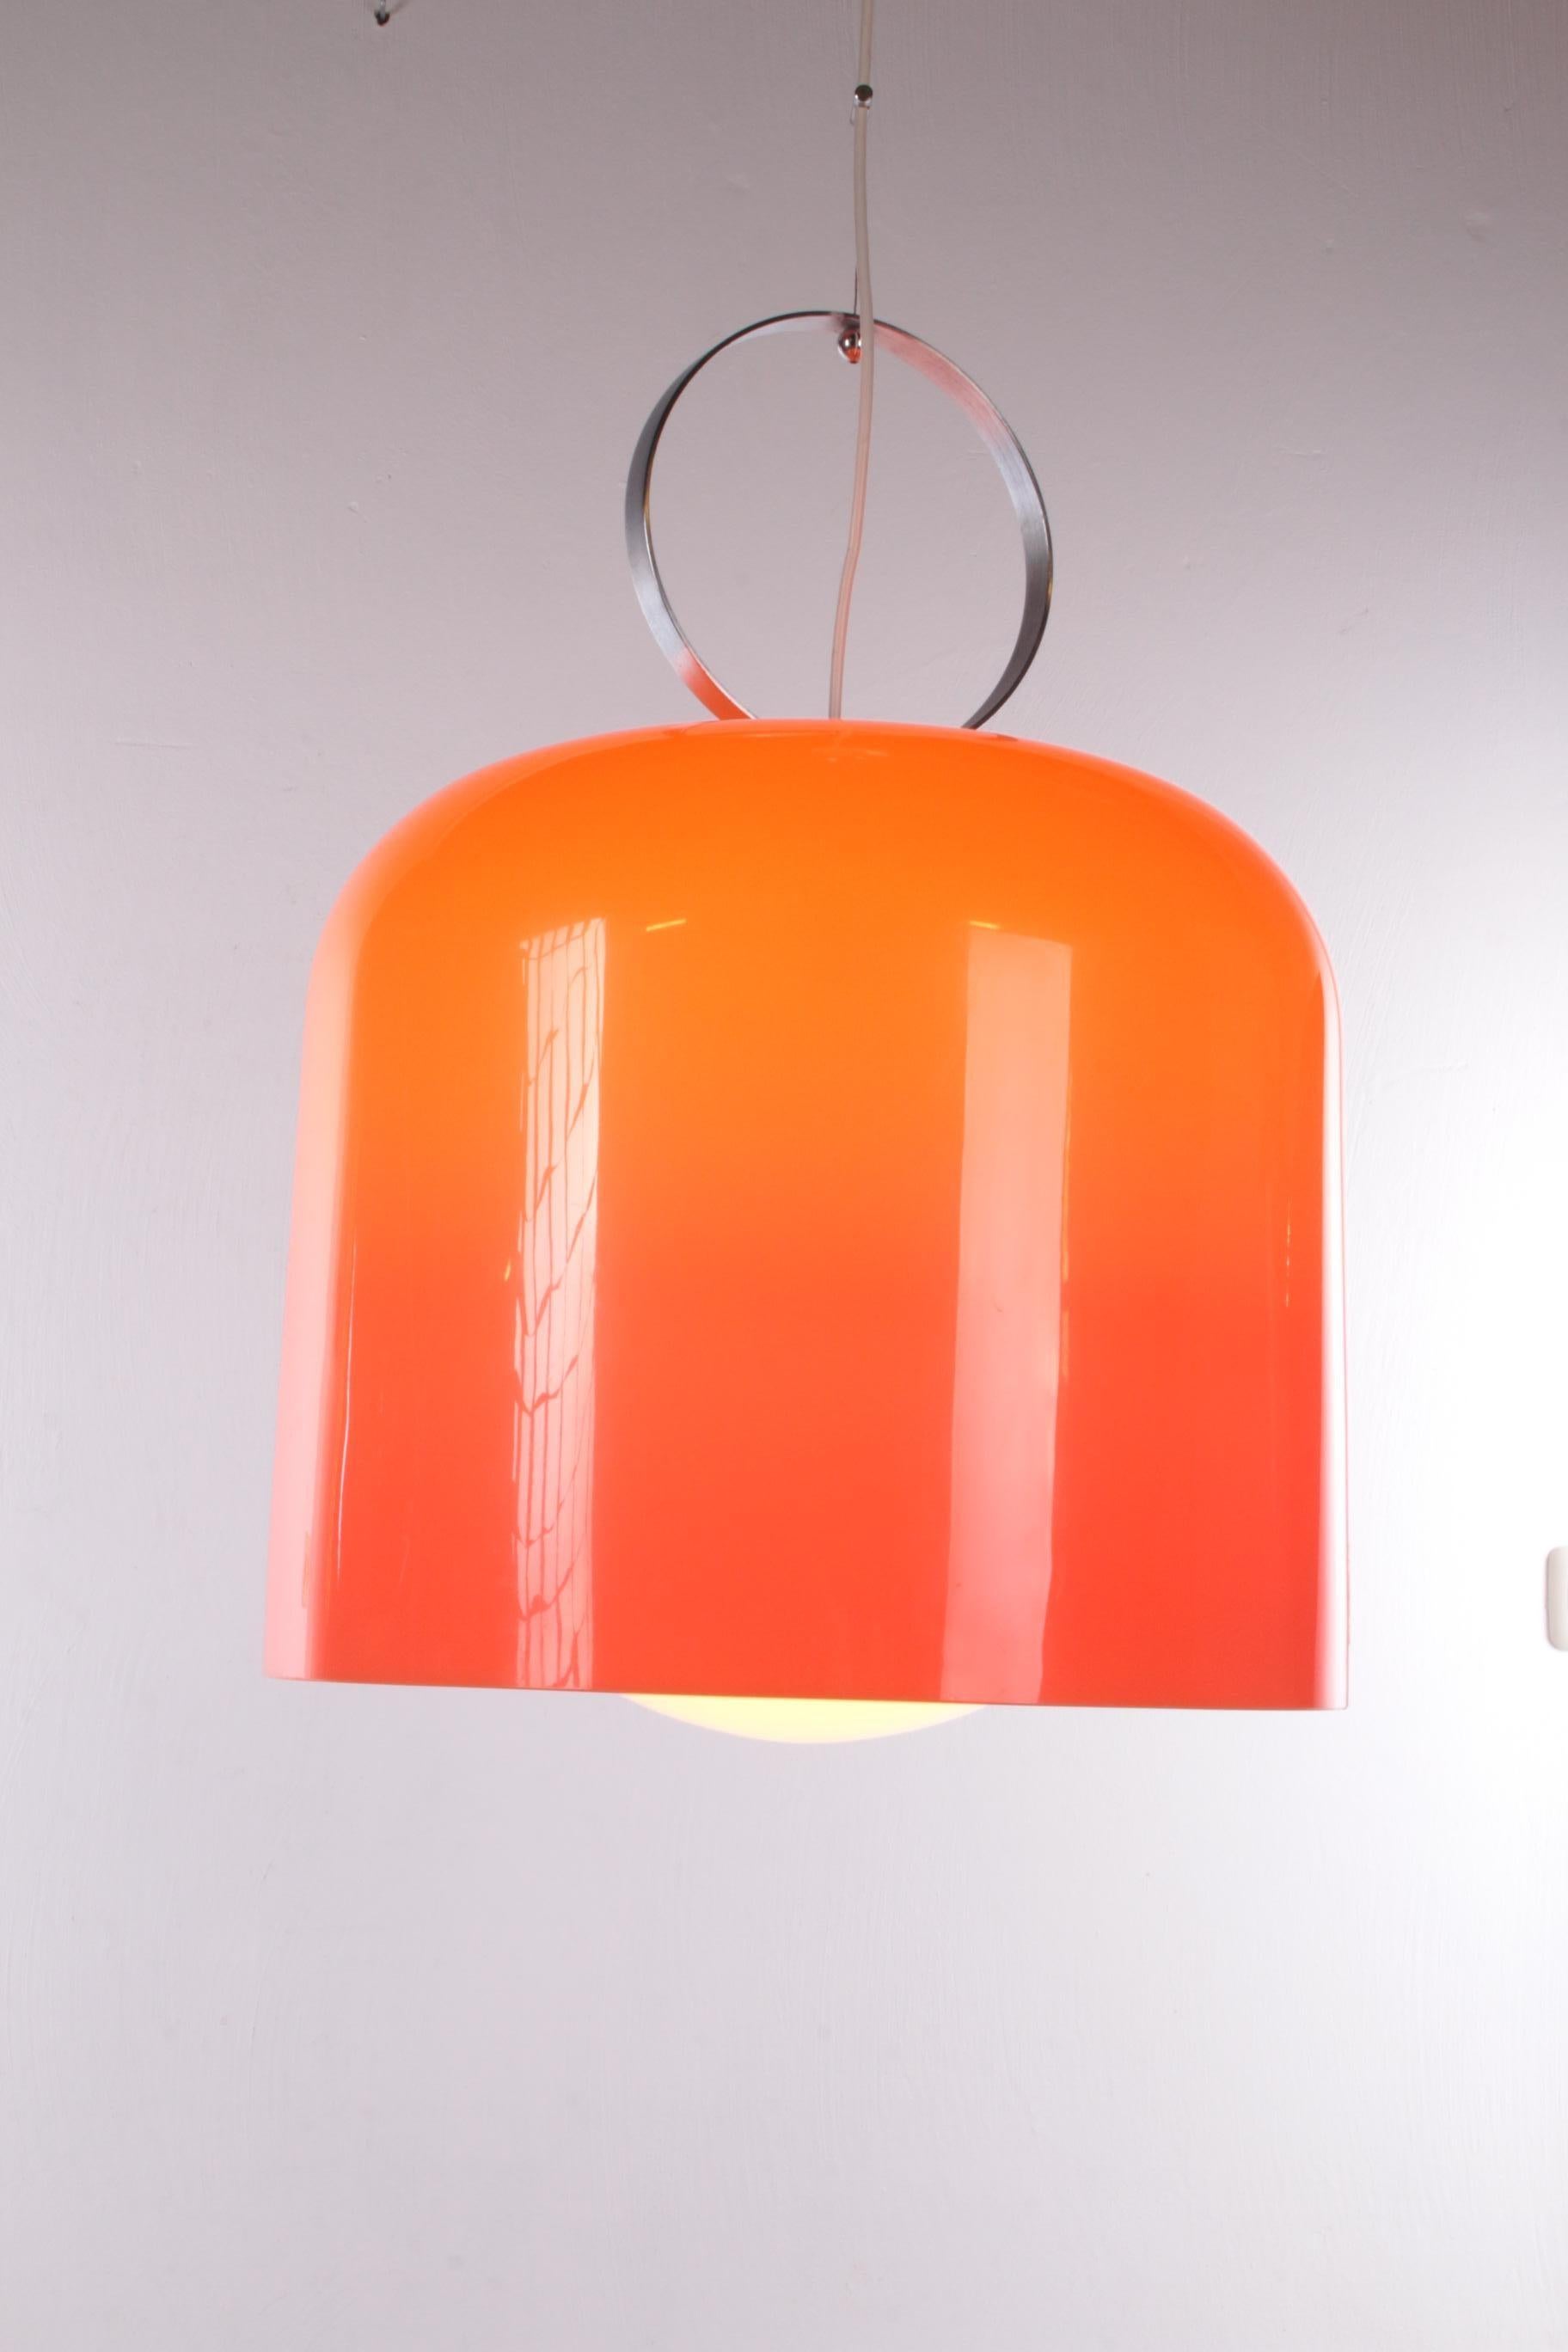 Italian Vintage Alvise Hanging Lamp by Luigi Massoni for Guzzini - 1970s Design For Sale